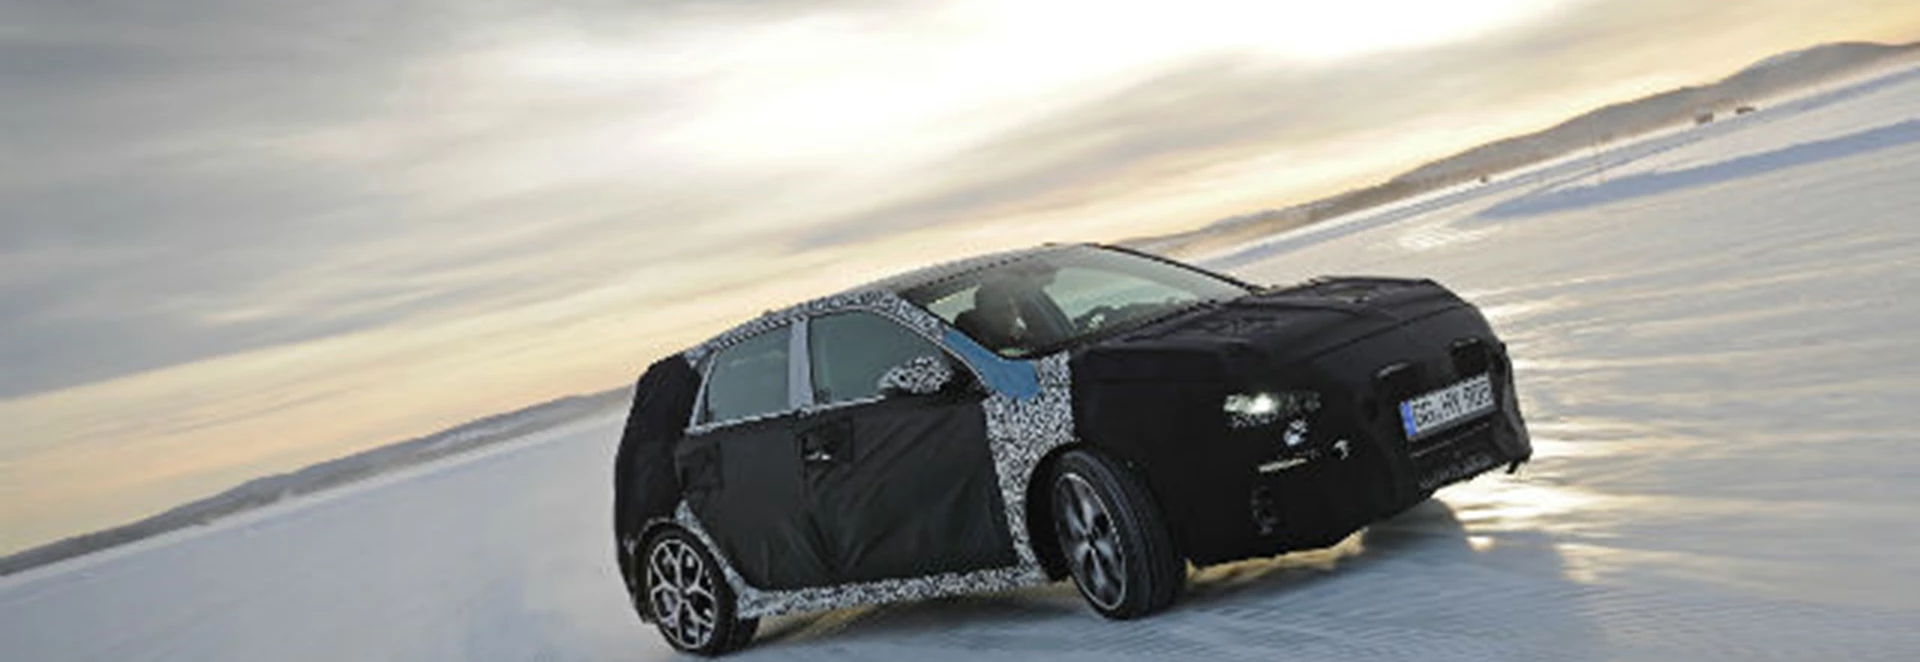 Hyundai i30 N hot hatch development continues on UK’s roughest roads